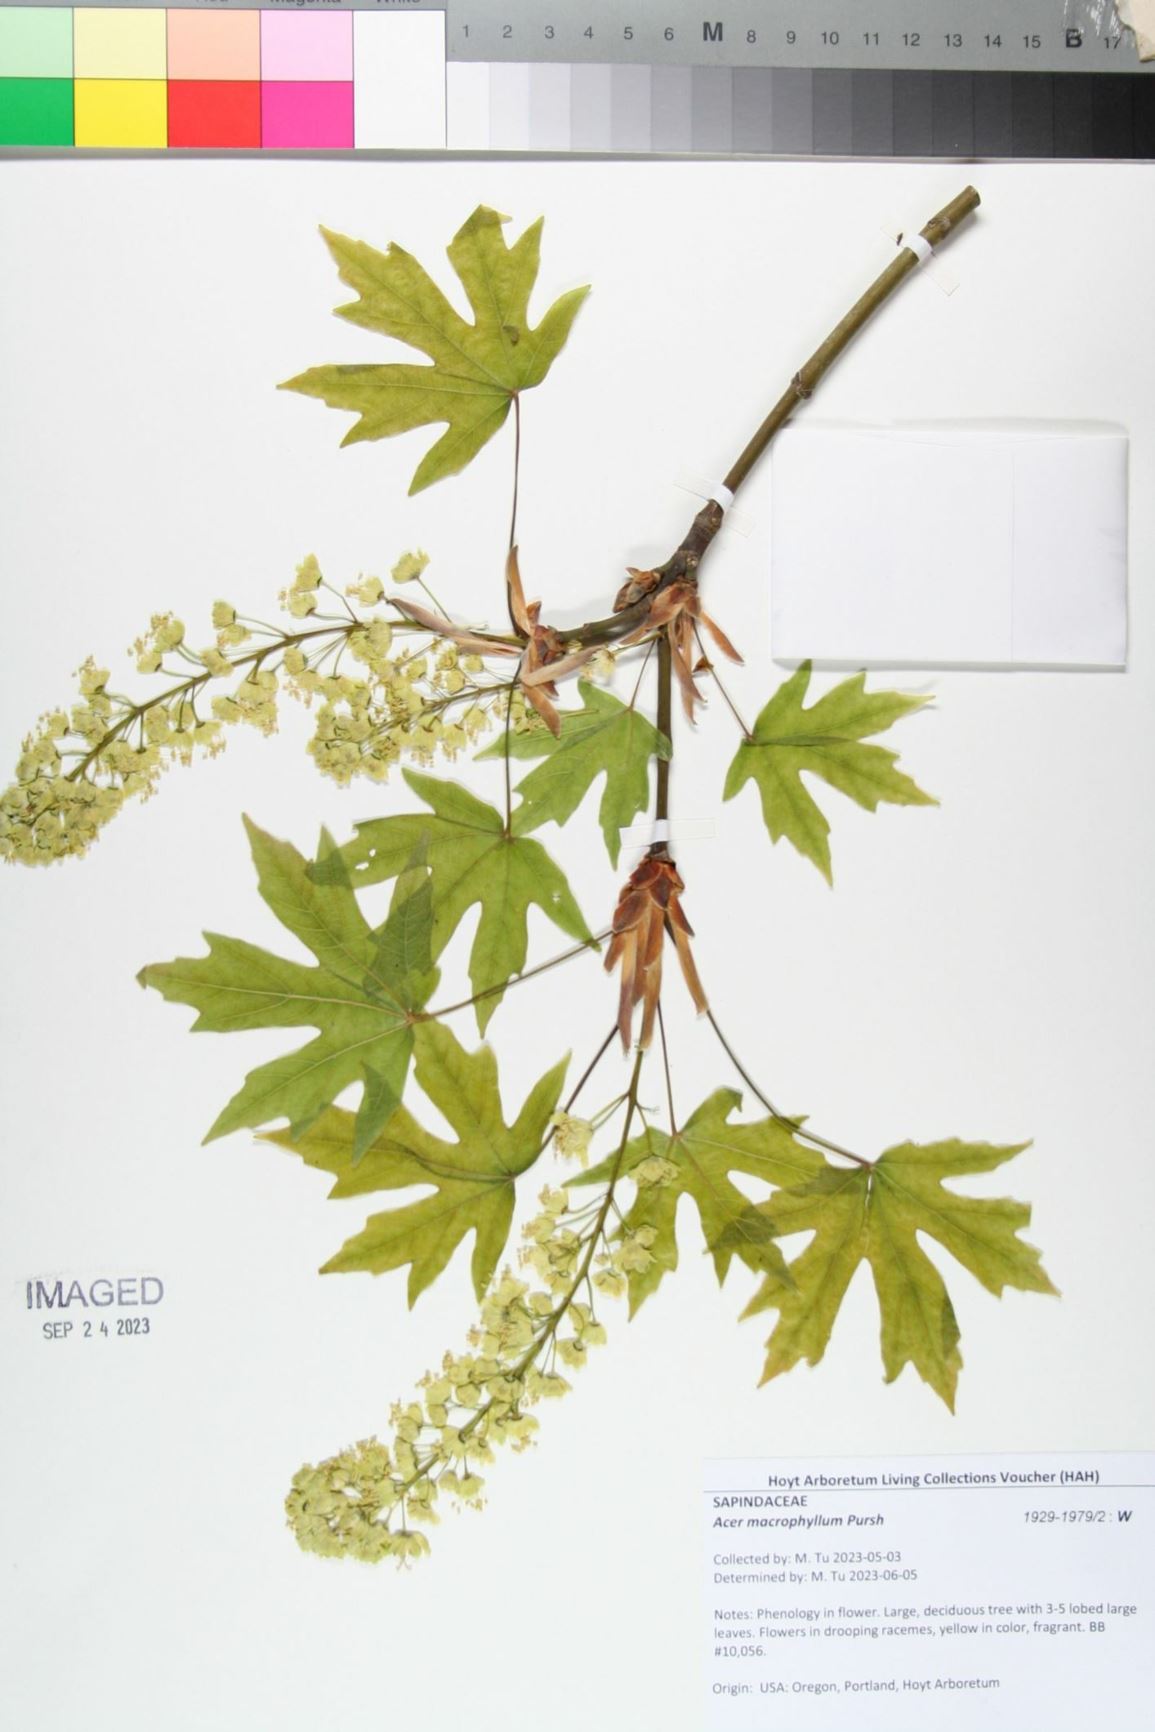 Acer macrophyllum - bigleaf maple